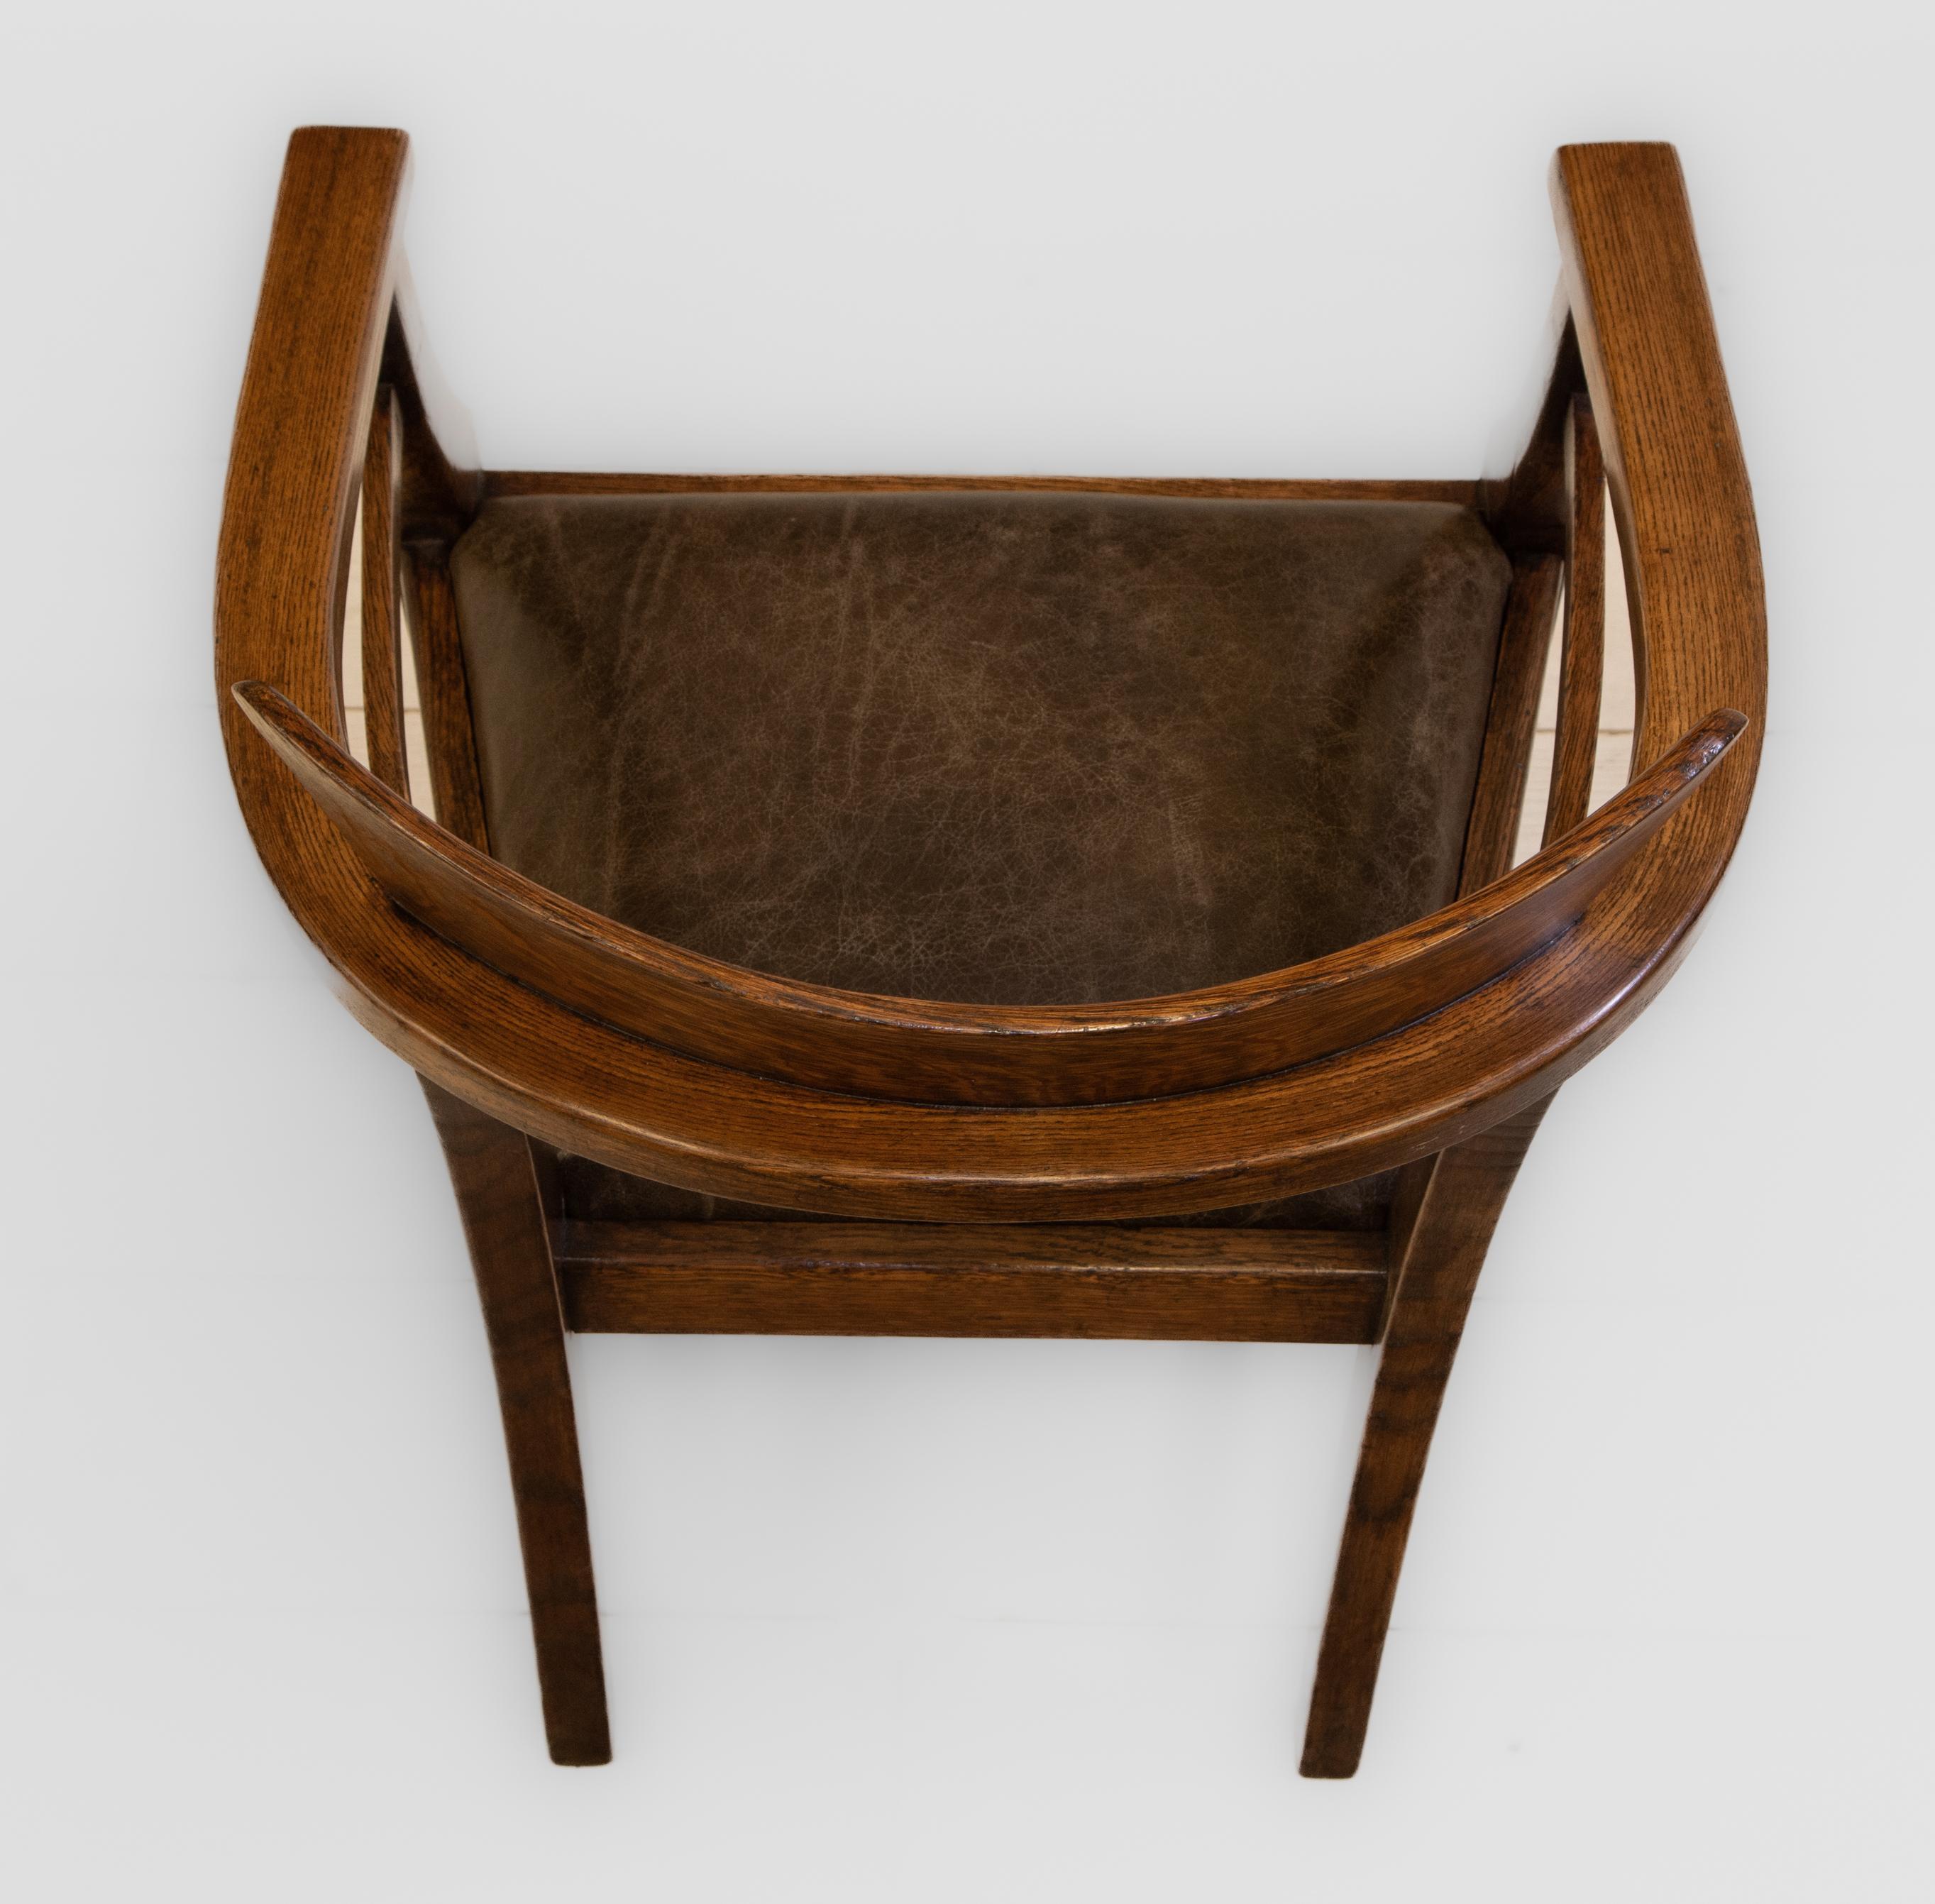 German Art & Crafts Oak and Leather Desk Chair In The Richard Riemerschmid Manner